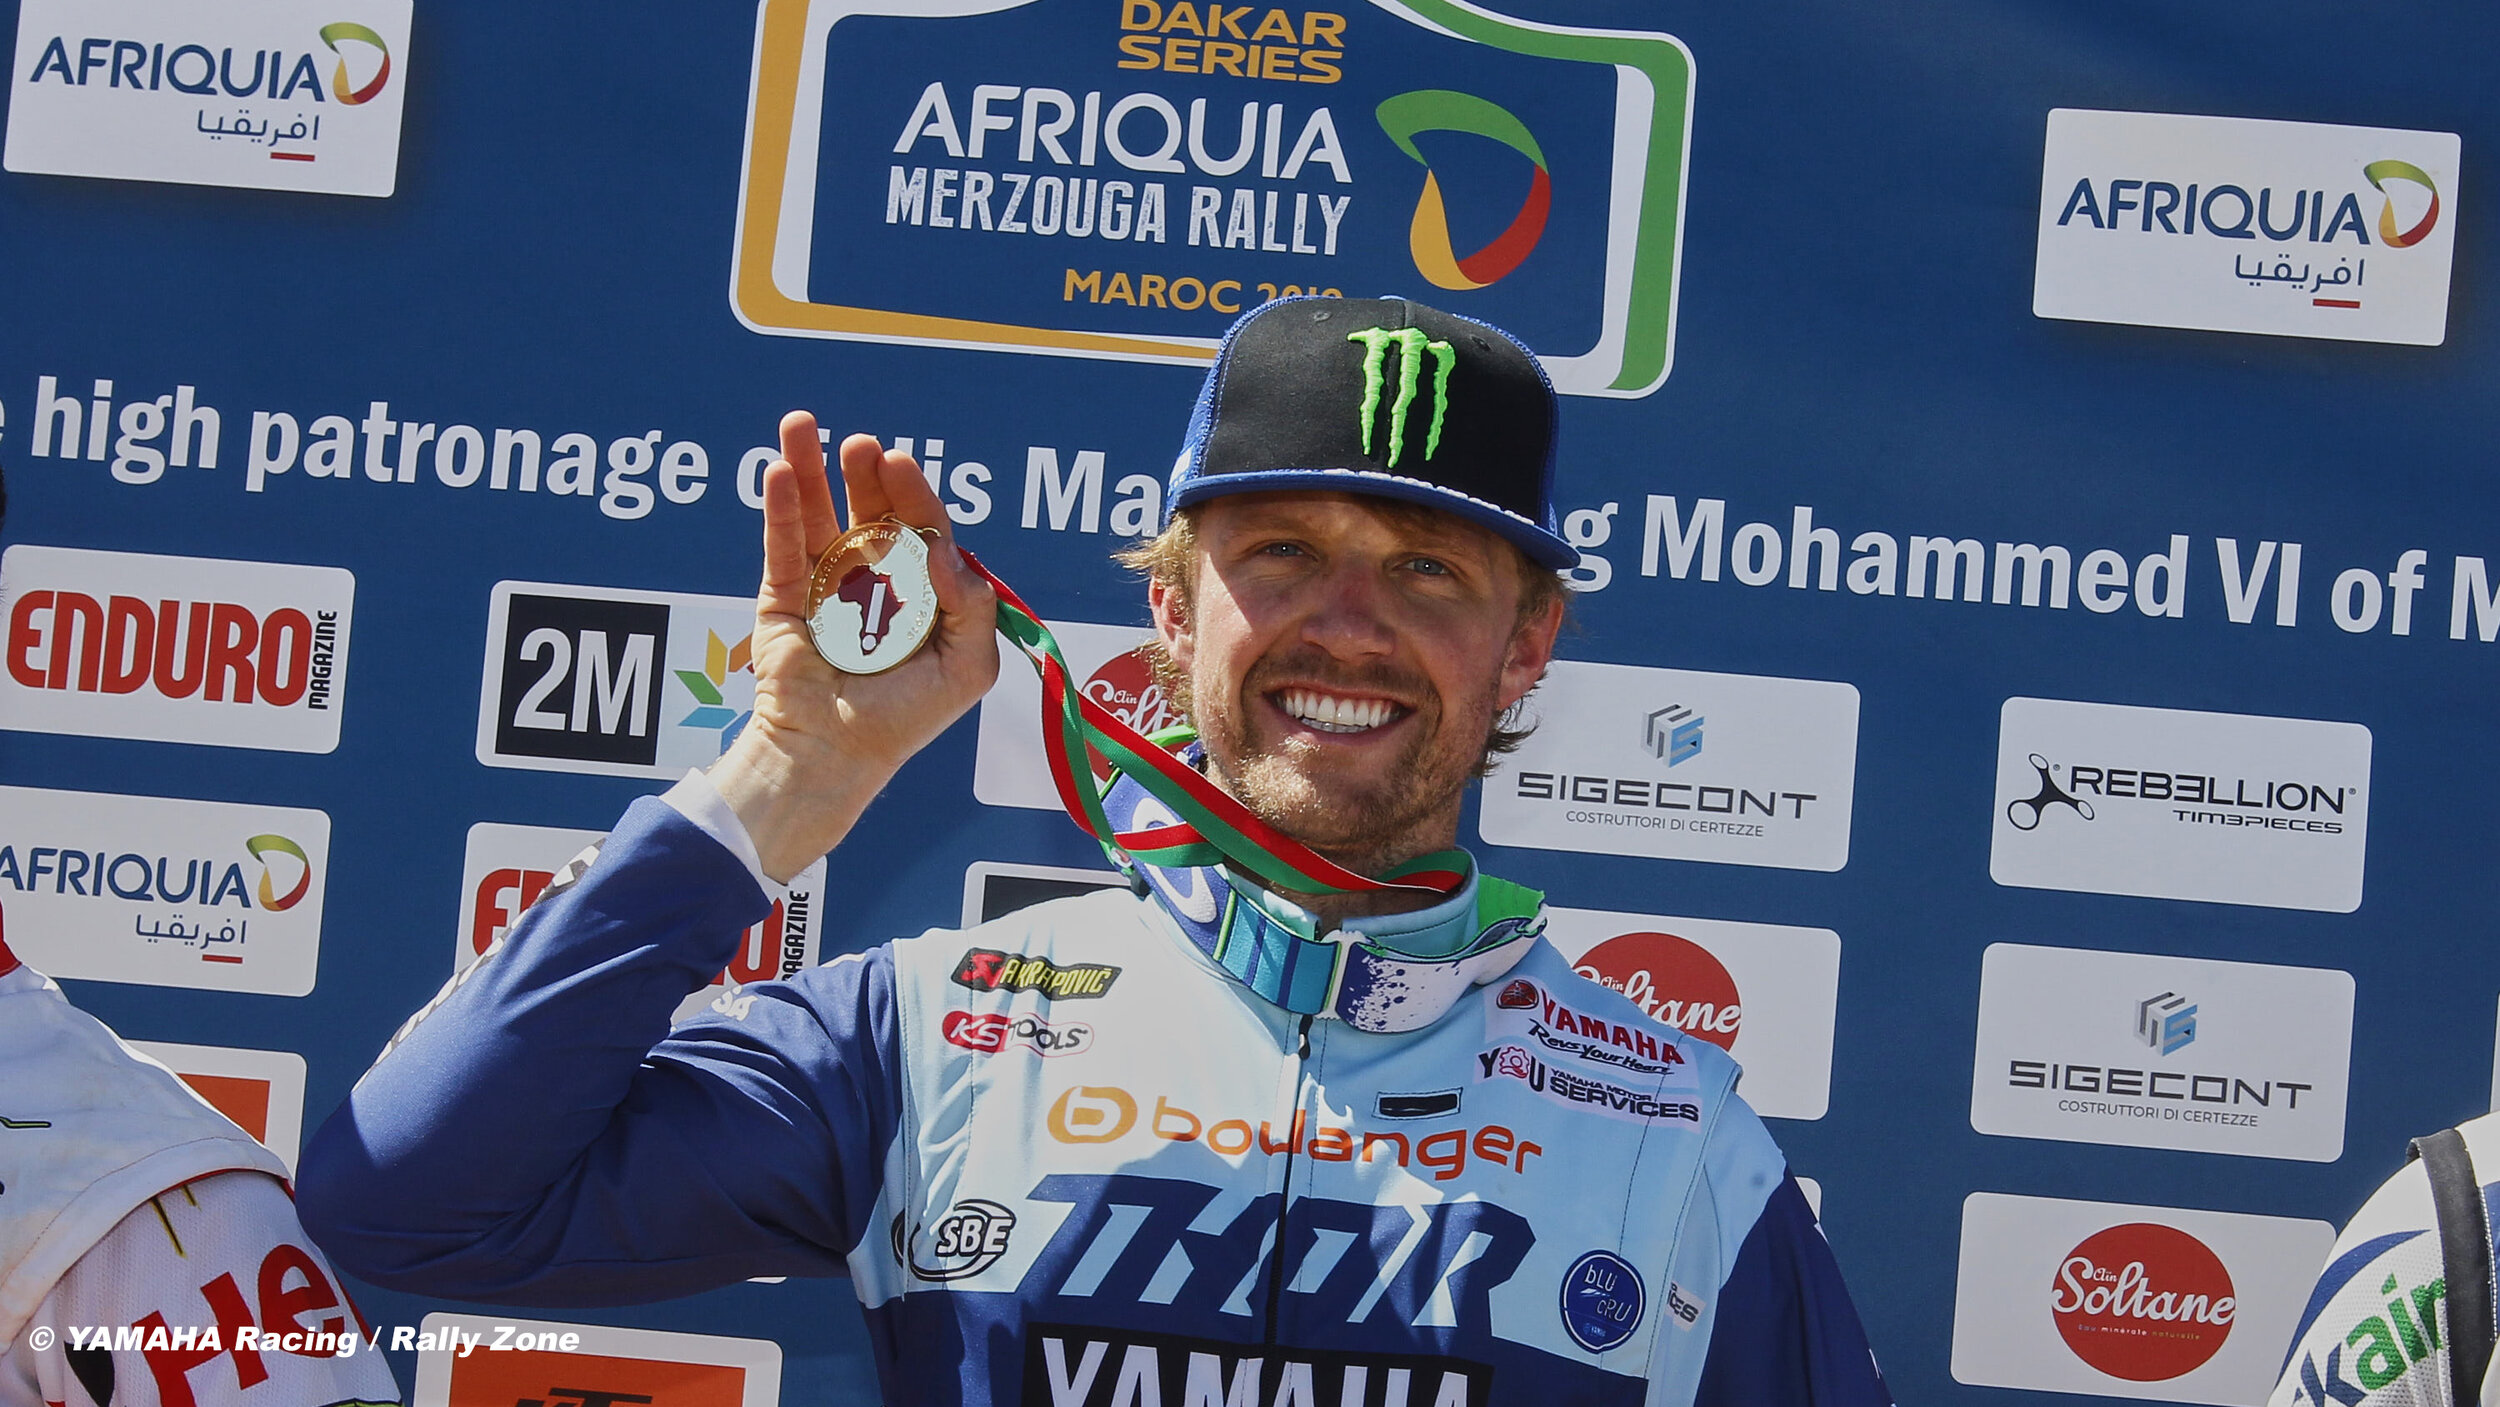 Adrien VAN BEVEVEREN - Merzouga Rally 019 - ©Yamaha Racing-Rally Zone.jpg